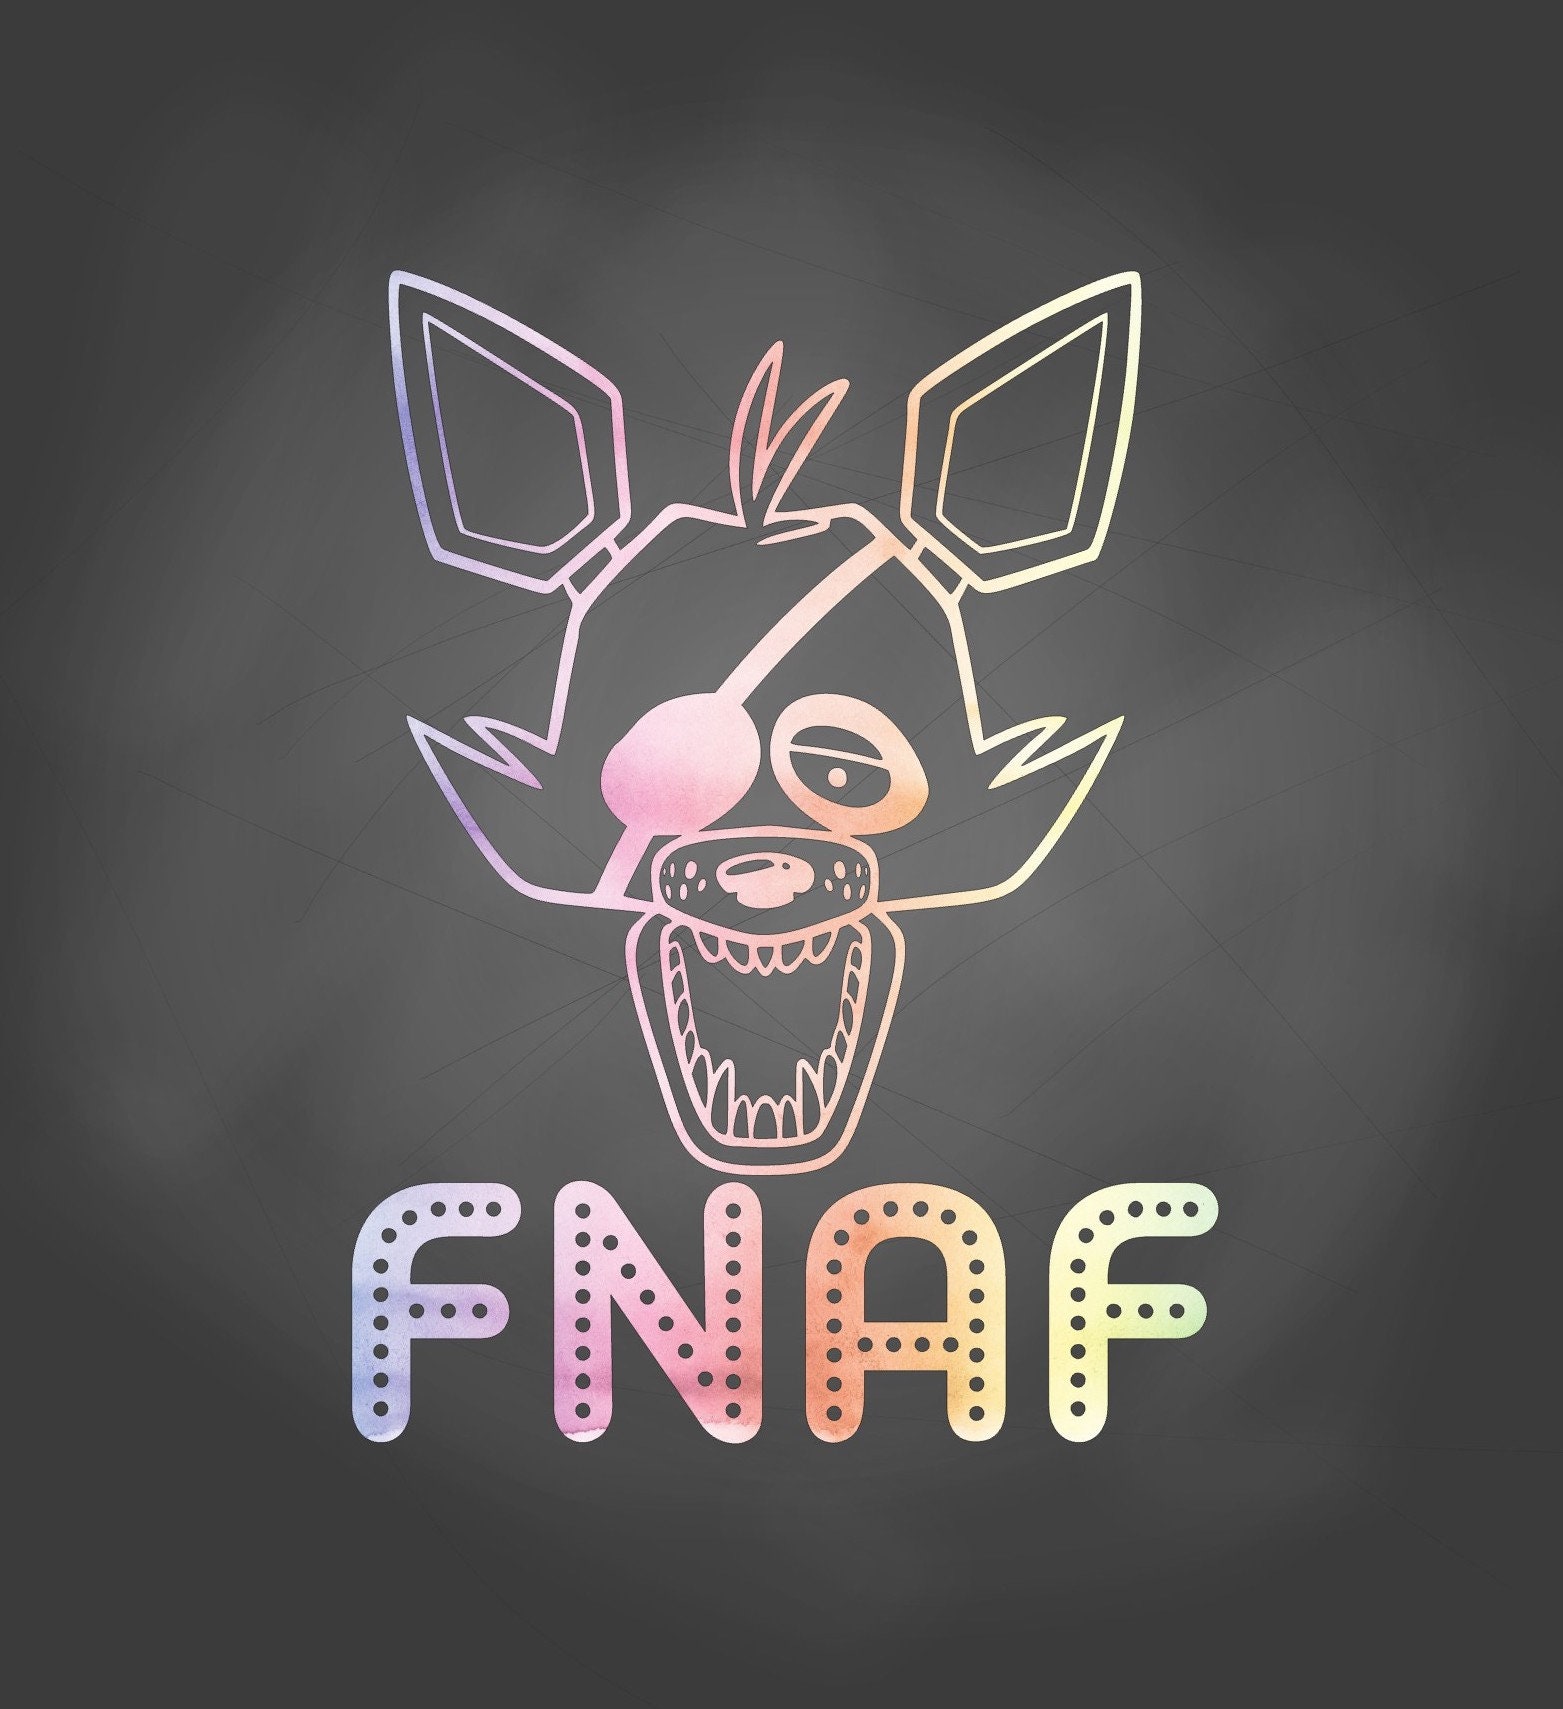 100+] Fnaf Foxy Wallpapers